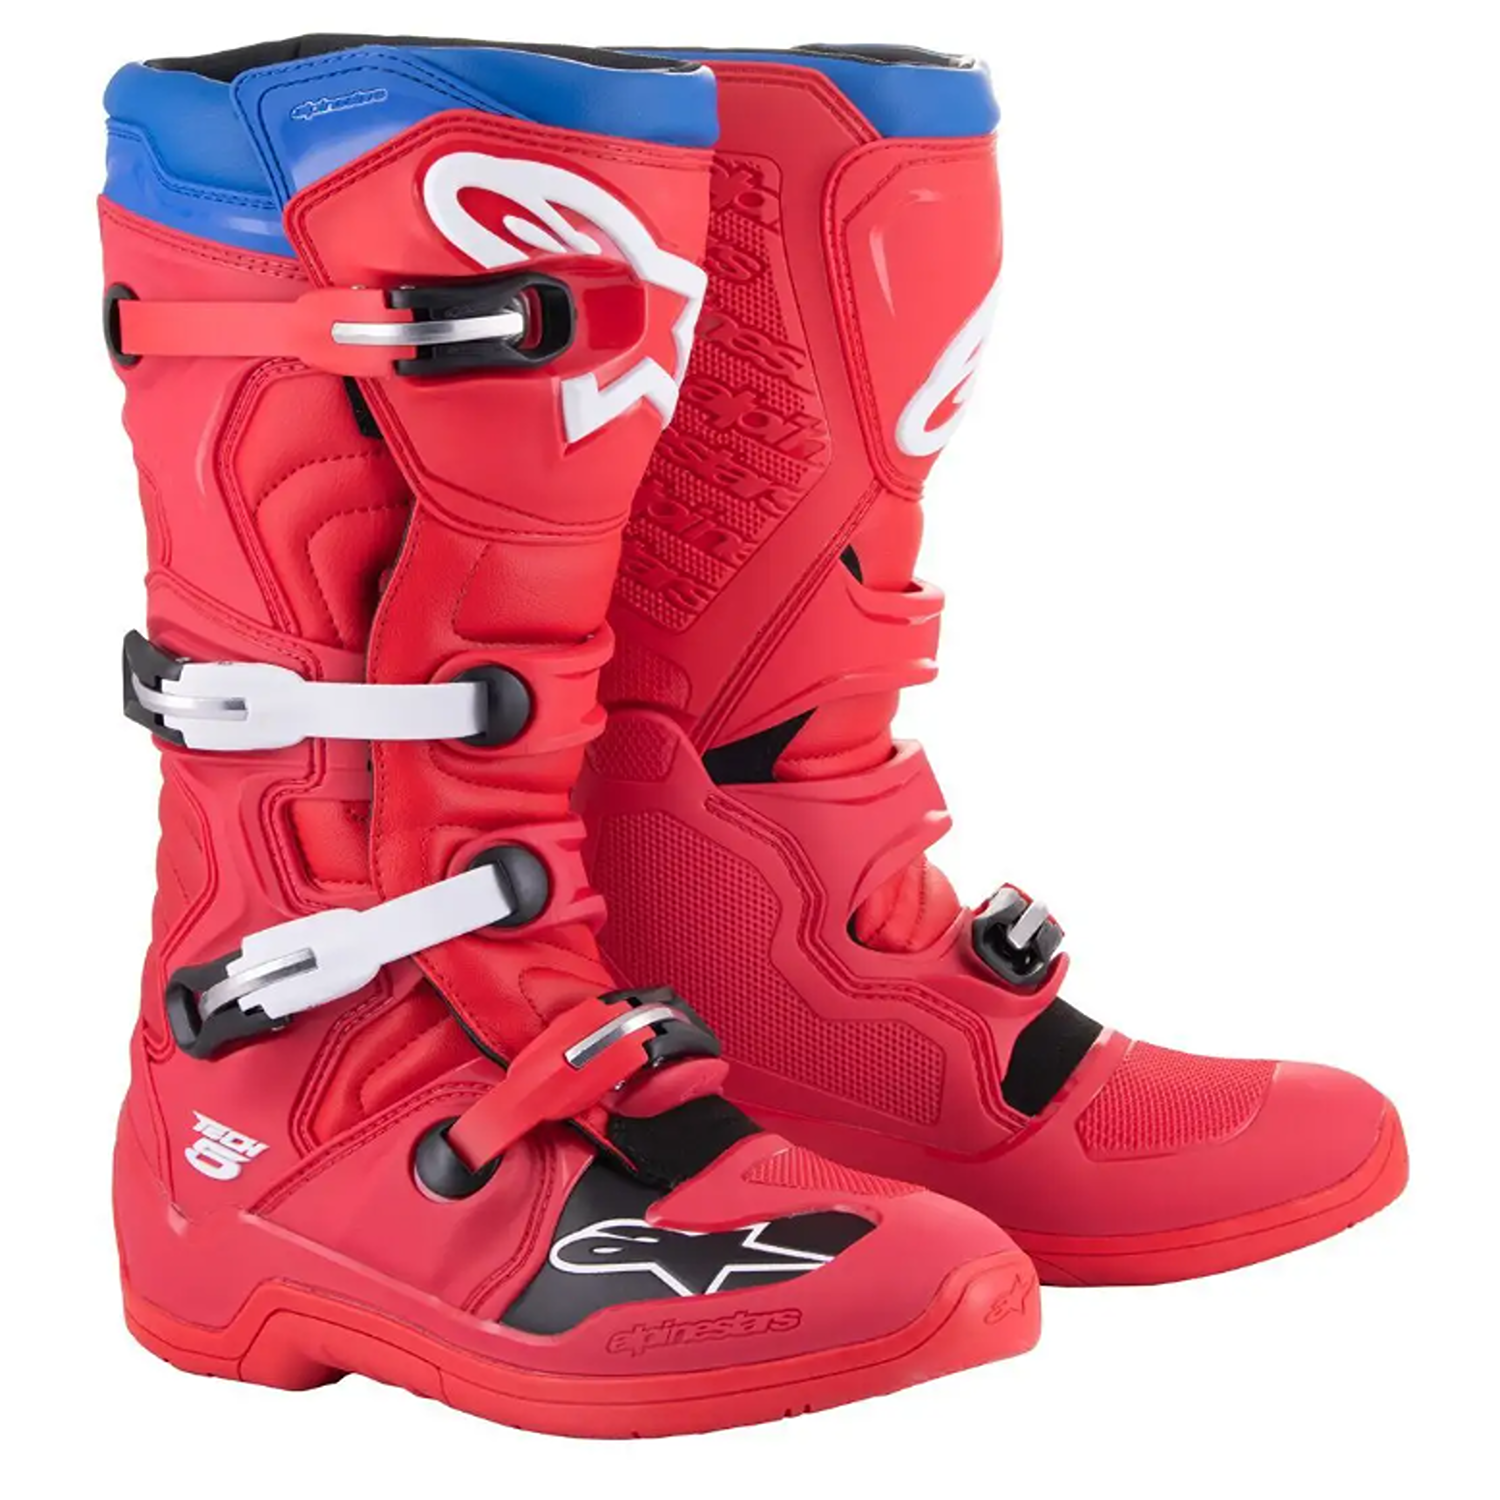 Image of Alpinestars Tech 5 Boots Bright Red Dark Red Blue Size US 6 EN